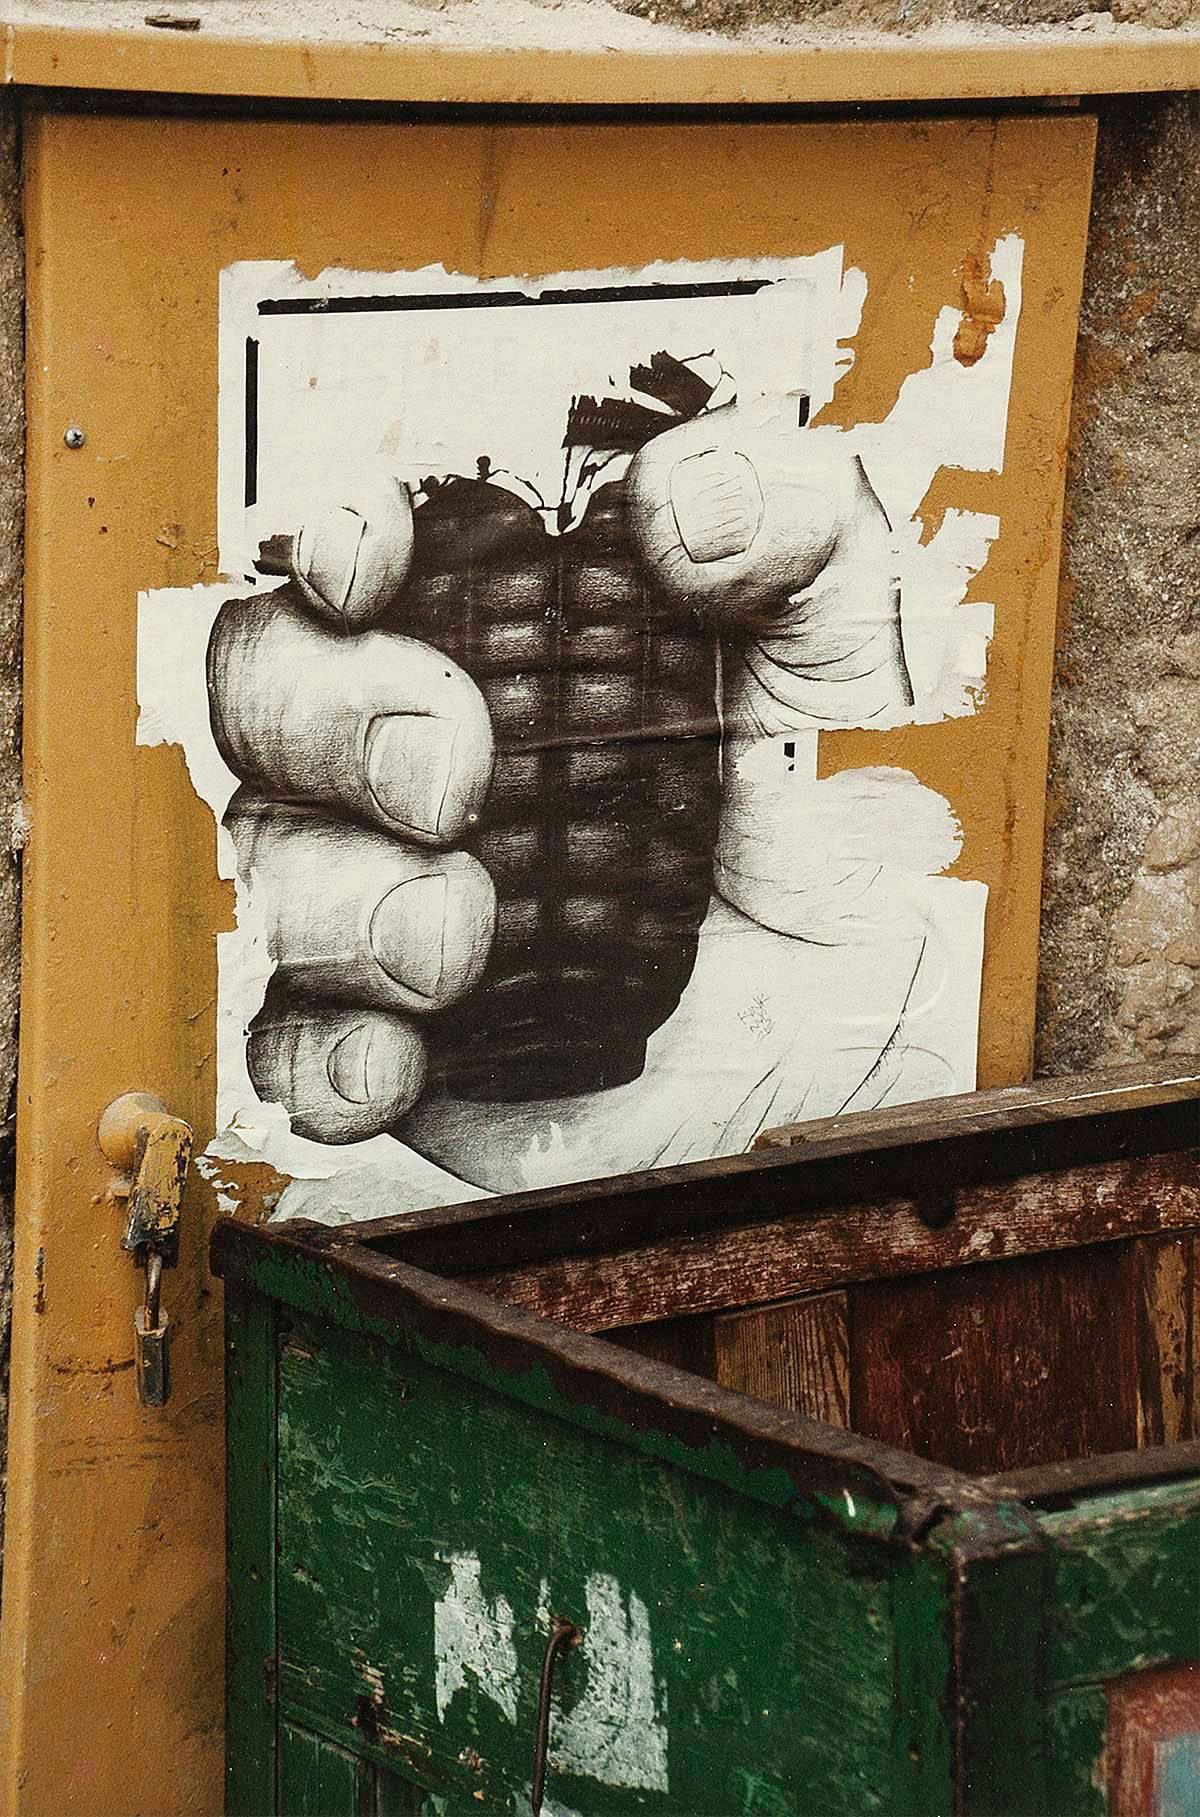 Hand Grenade Poster, Old City Jerusalem - Photograph by Eva Korn